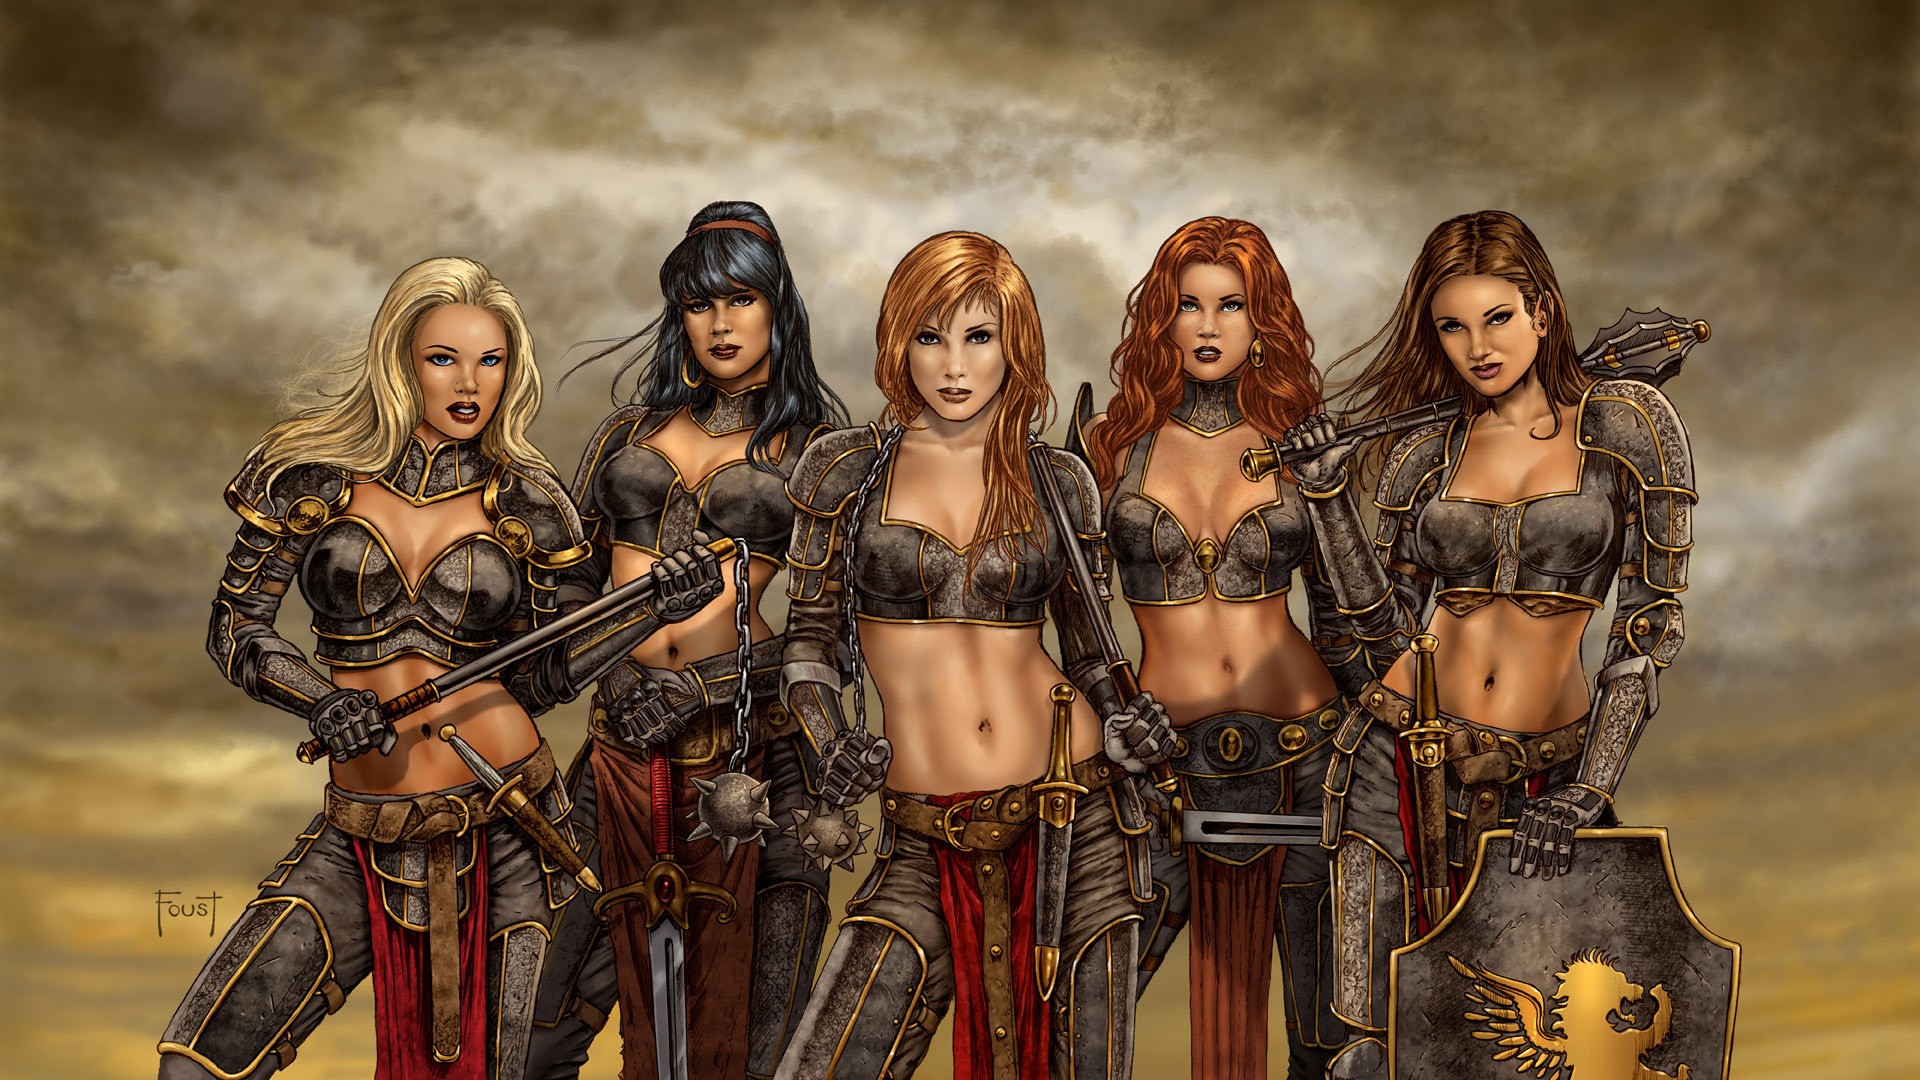 General 1920x1080 artwork fantasy art women warrior fantasy girl group of women blonde black hair brunette redhead belly shield sword standing looking at viewer